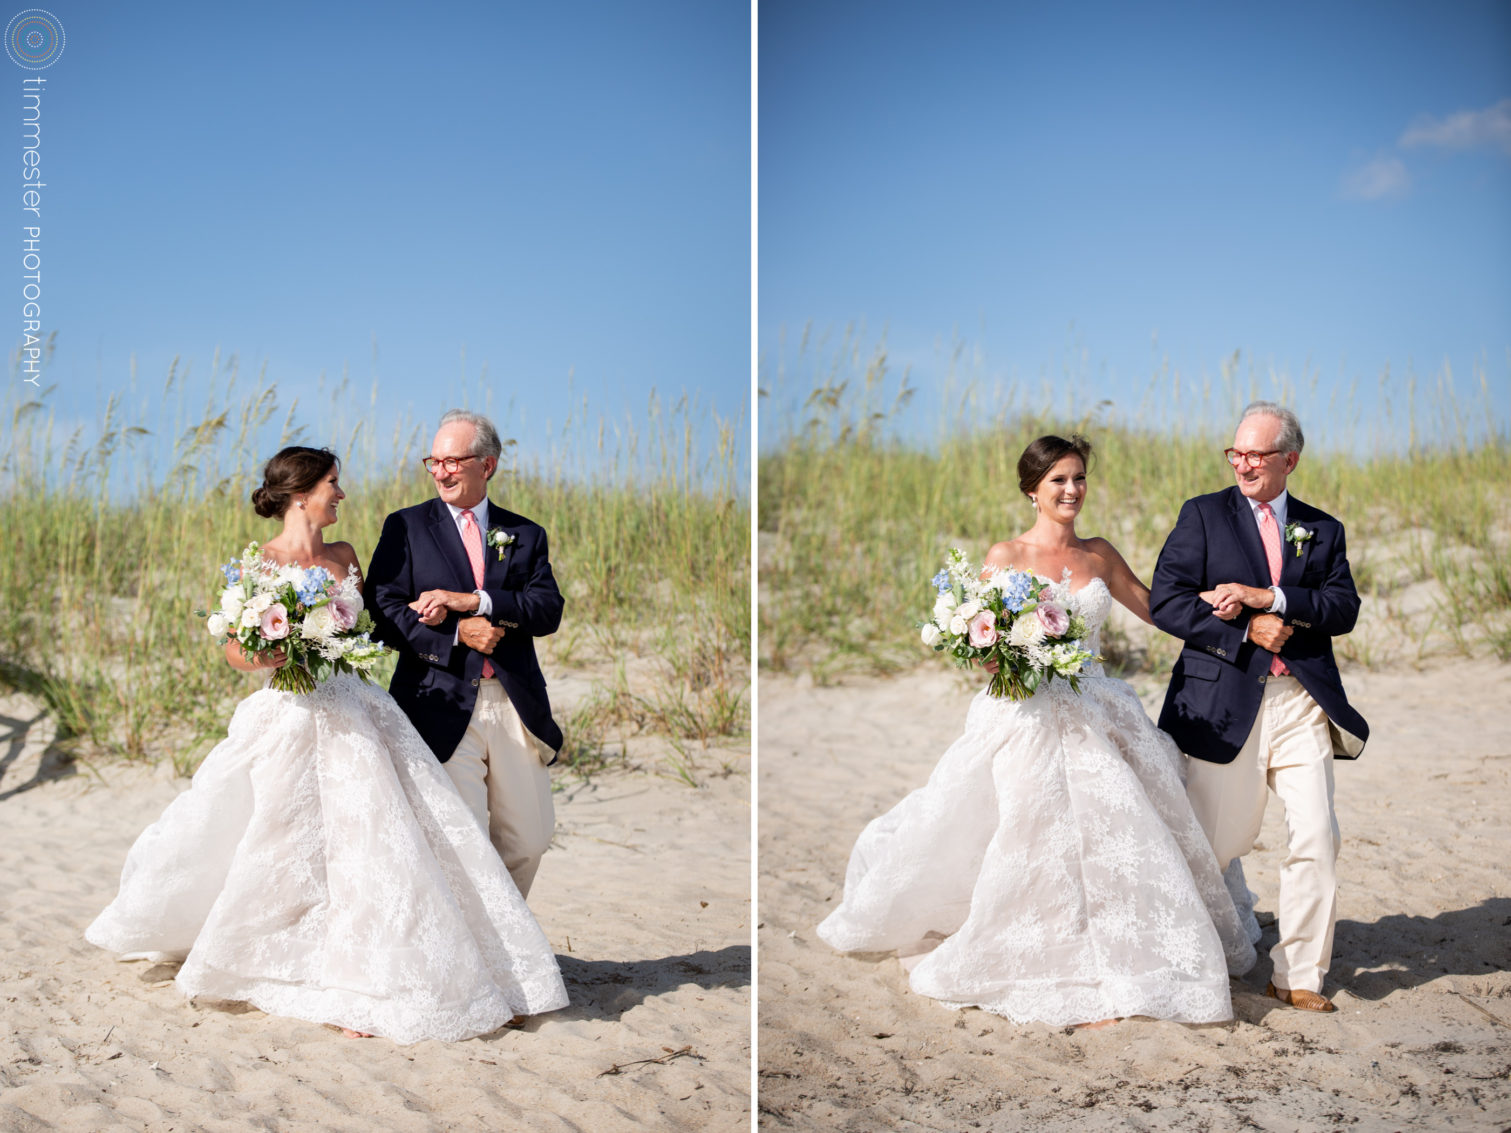 A wedding on the beach in North Carolina at Bald Head Island